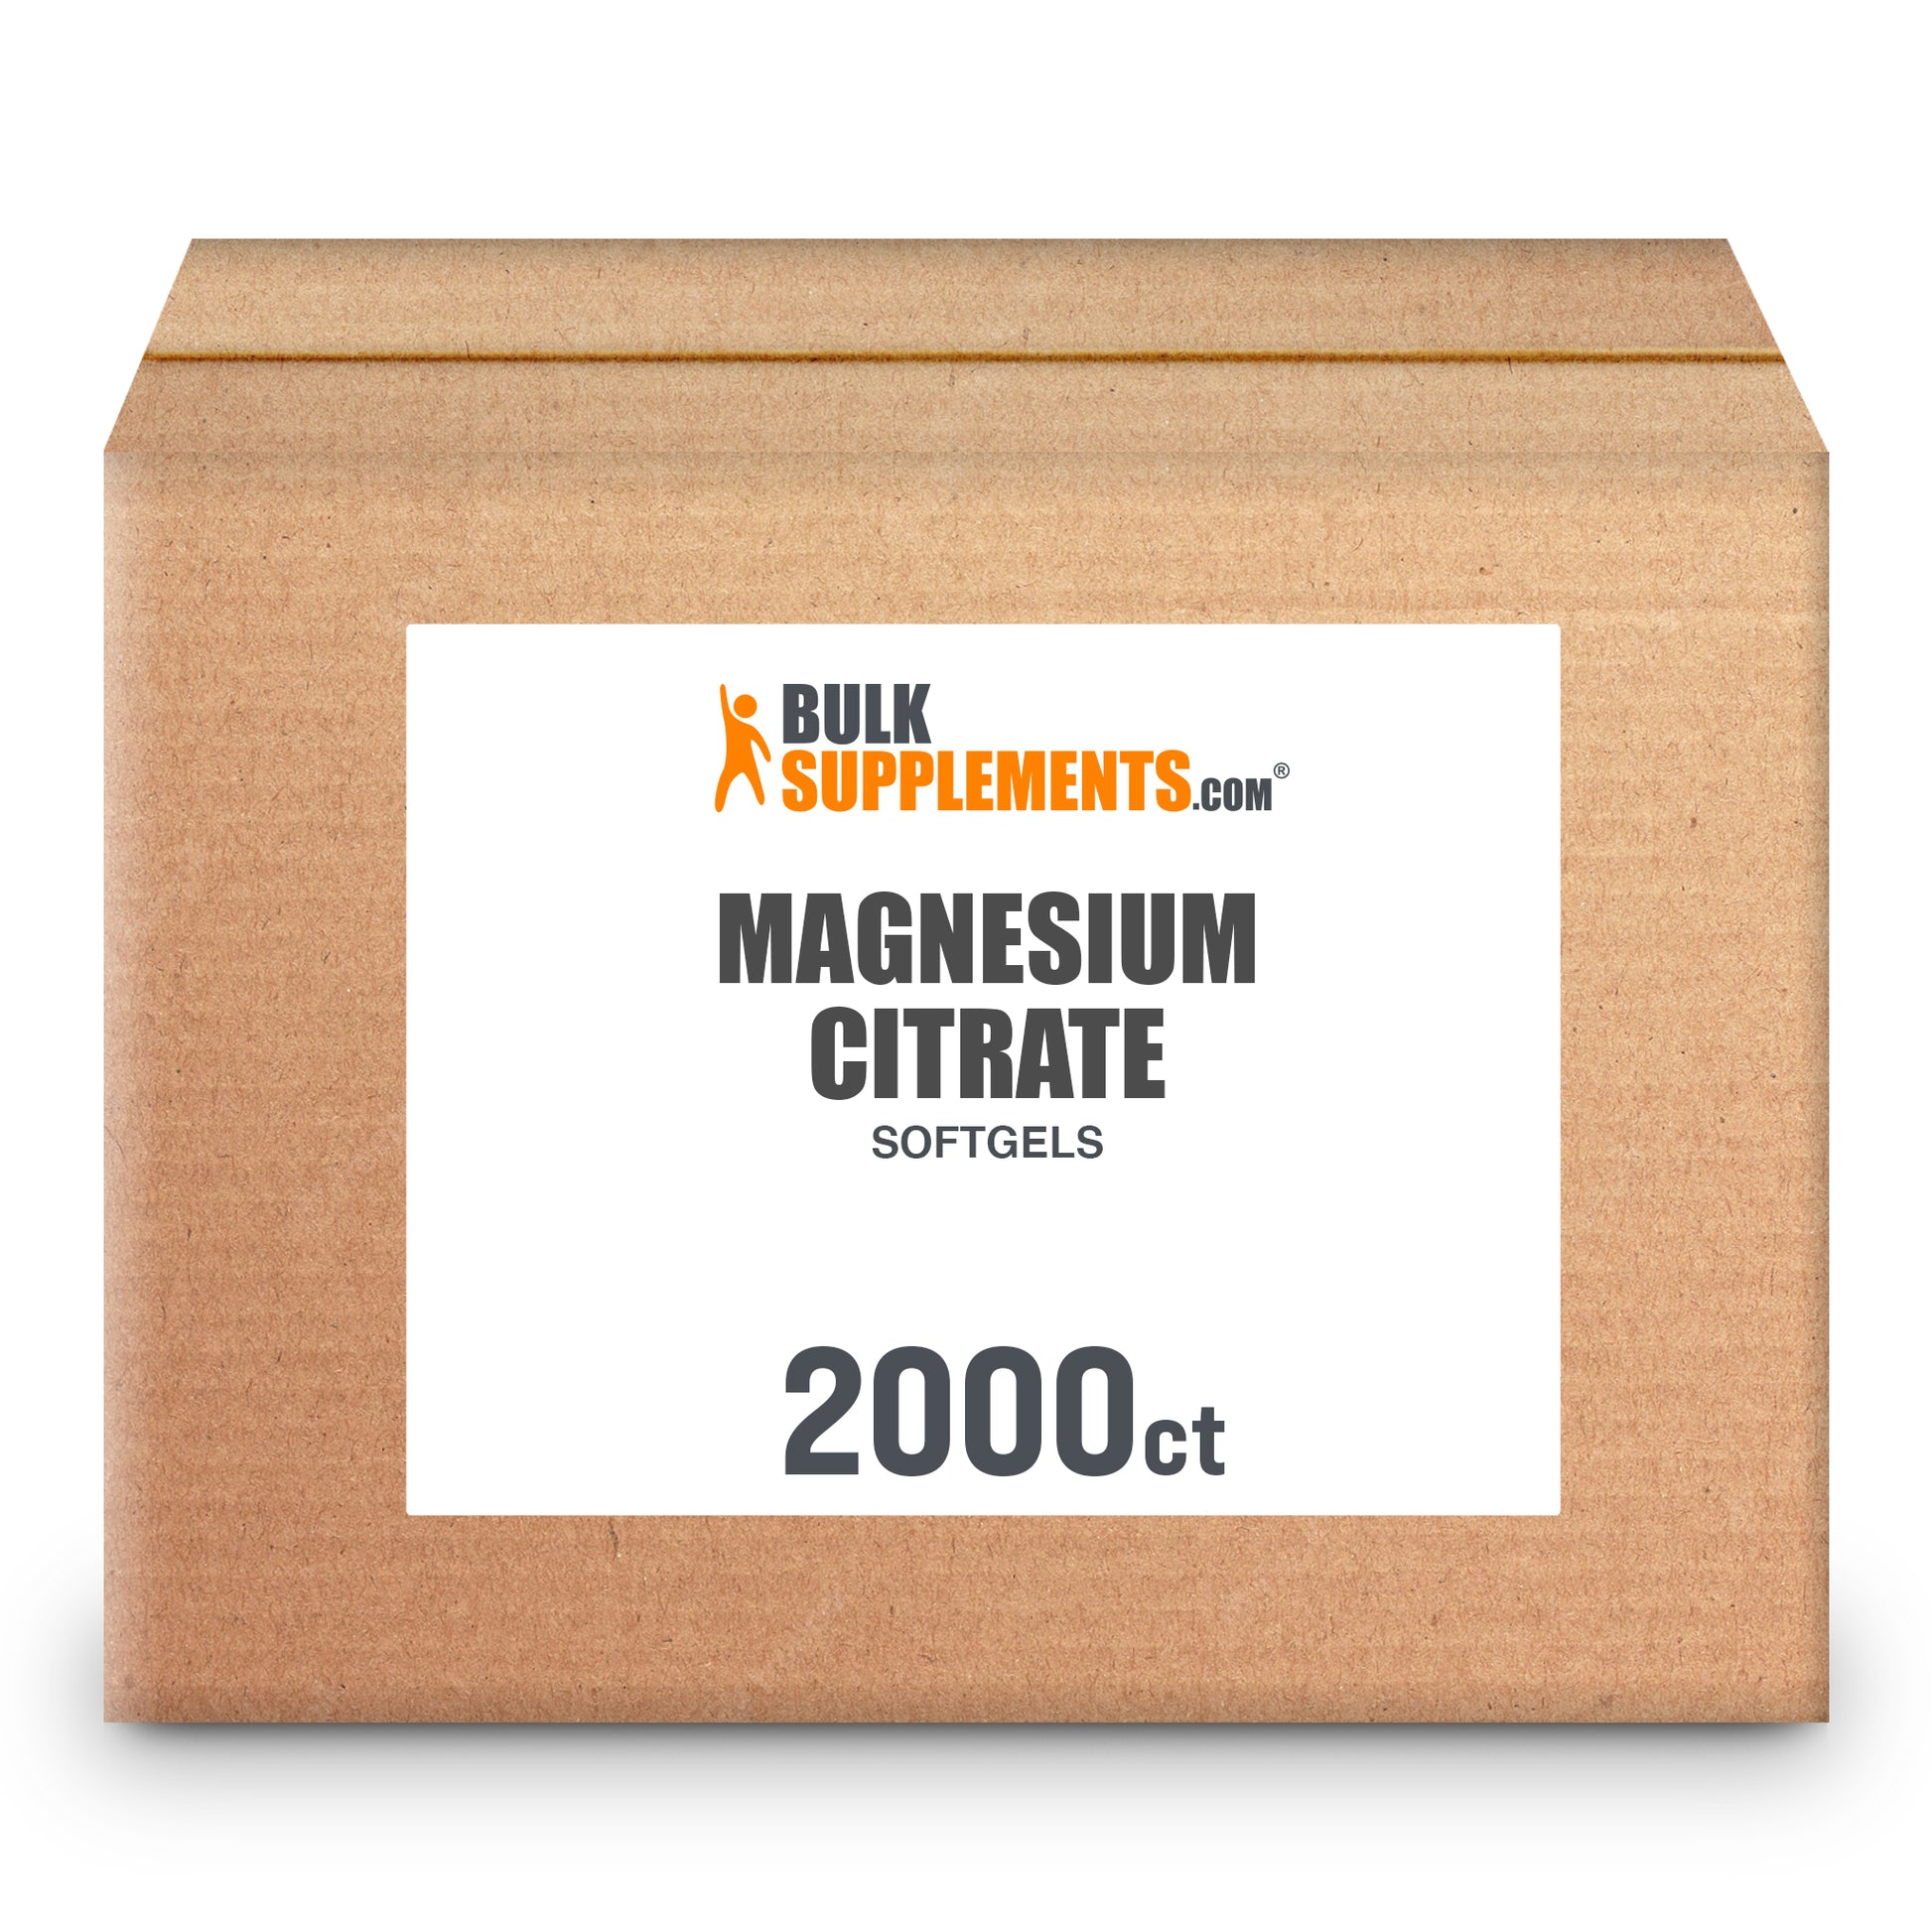 Magnesium Citrate Softgels 2000 ct box